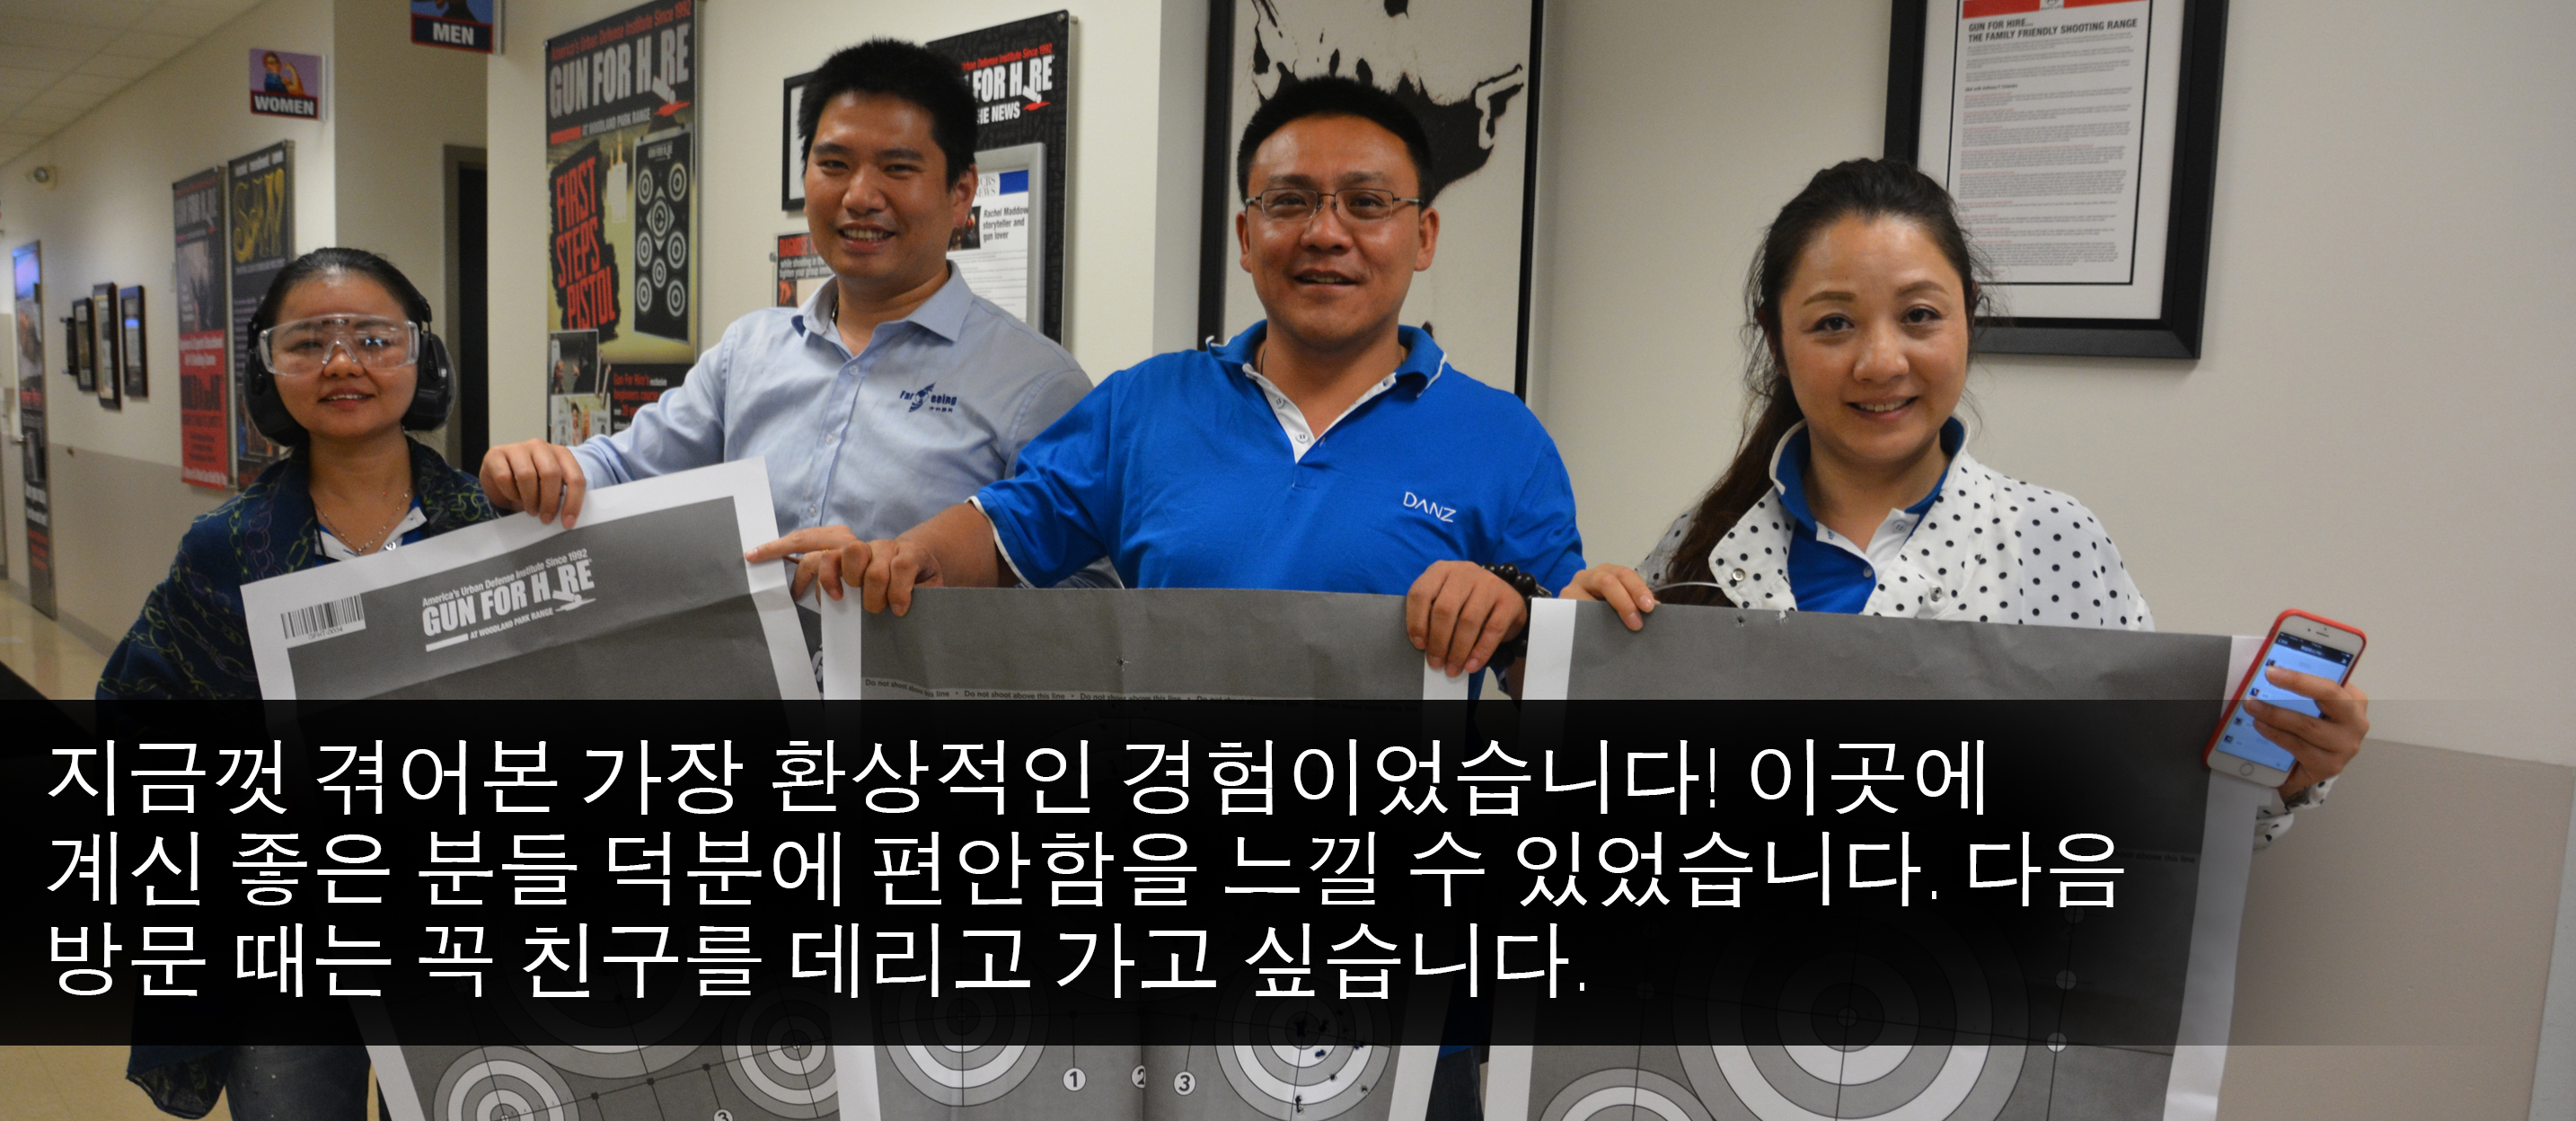 Korean Shooting at gun range - gun hire welcomes korean community to the gun range